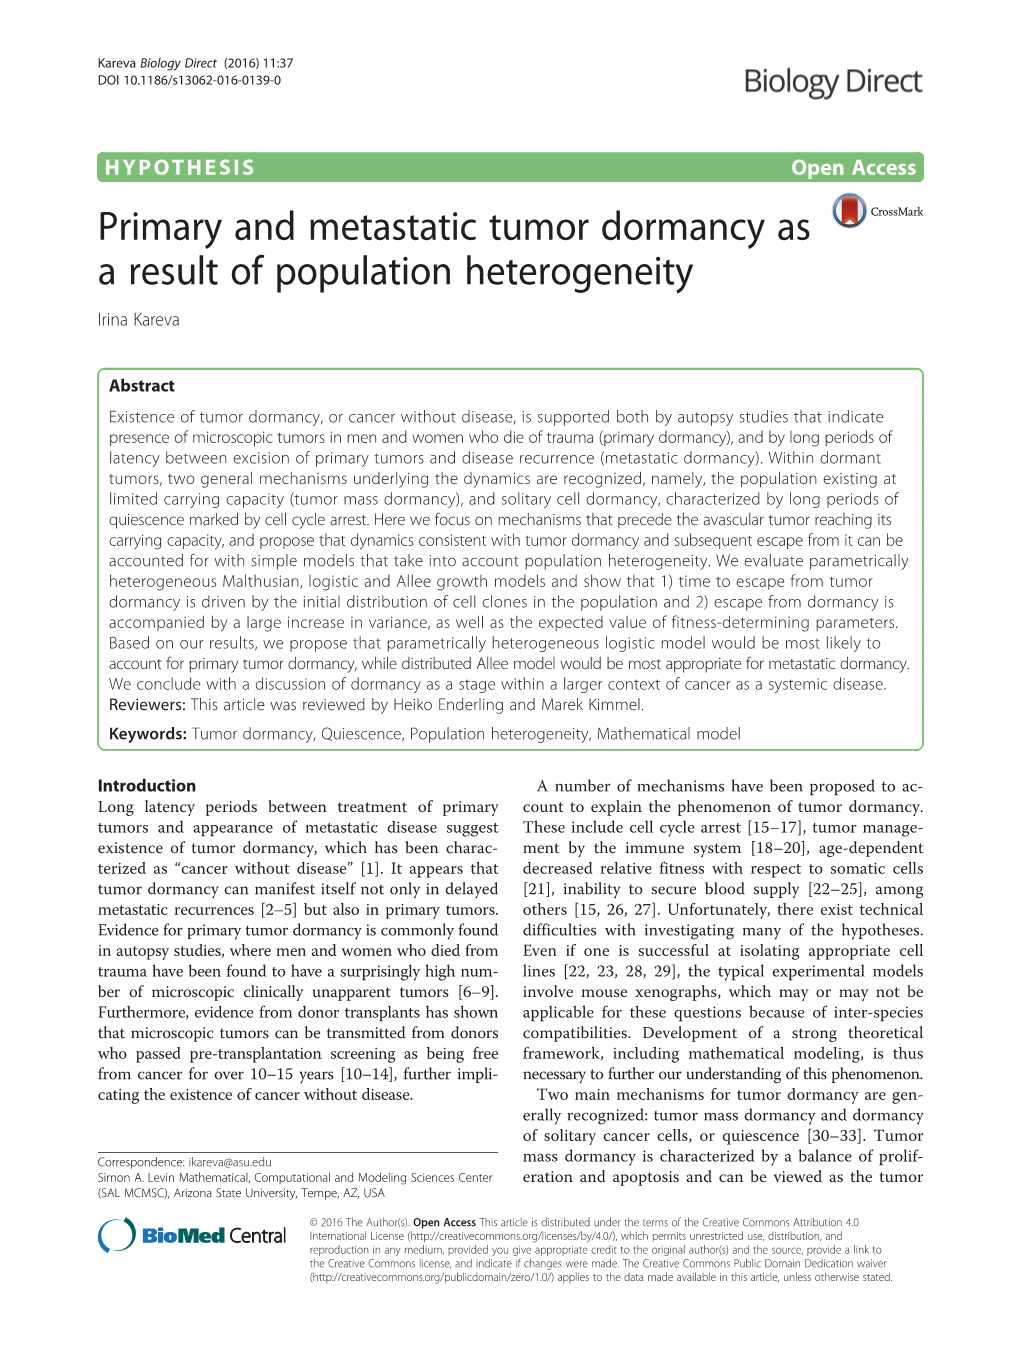 Primary and Metastatic Tumor Dormancy As a Result of Population Heterogeneity Irina Kareva